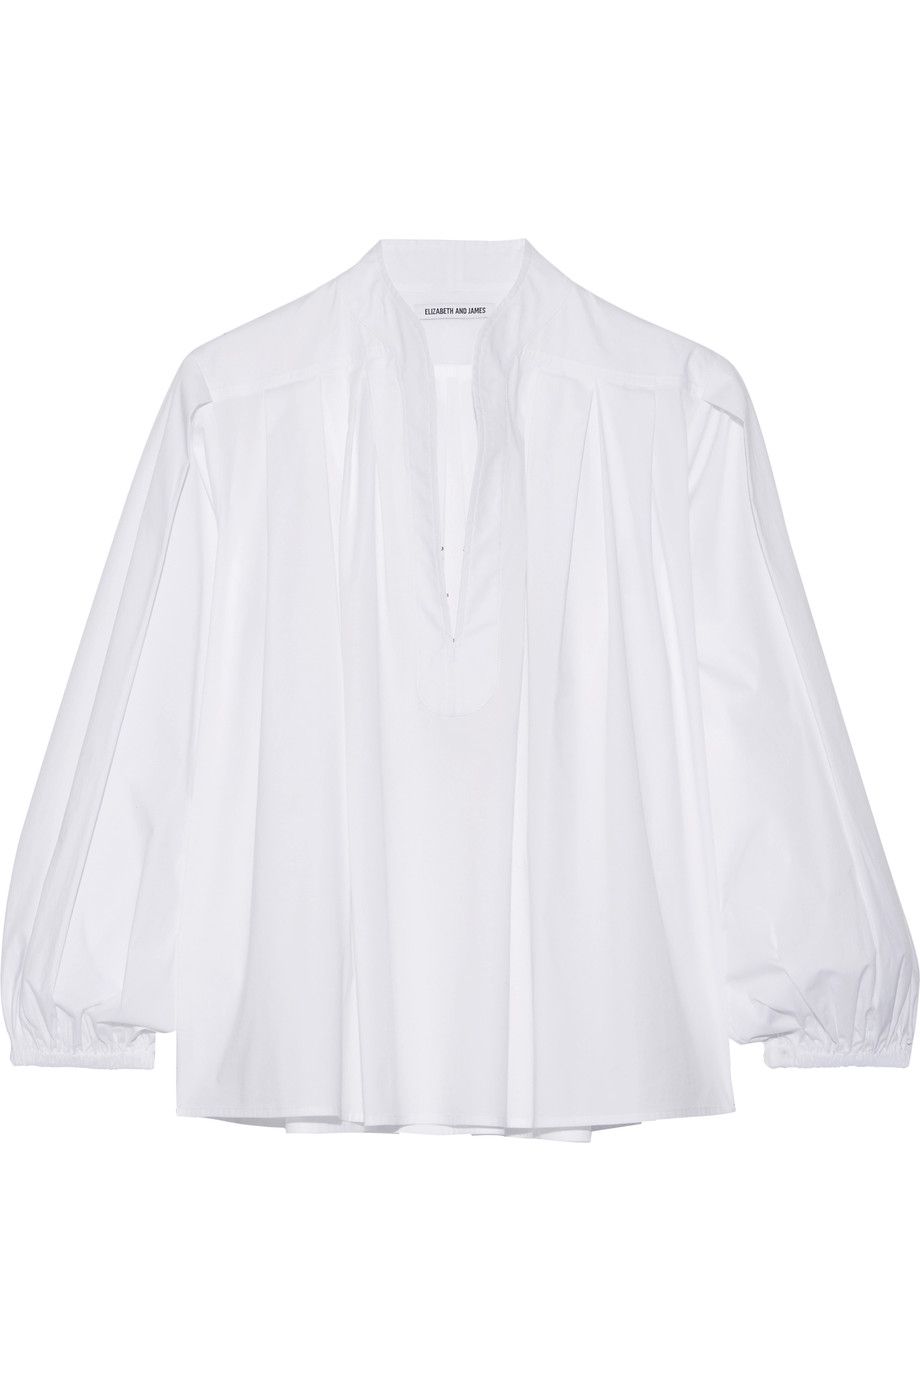 Clothing, White, Outerwear, Sleeve, Blouse, Collar, Blazer, Neck, Button, Top, 